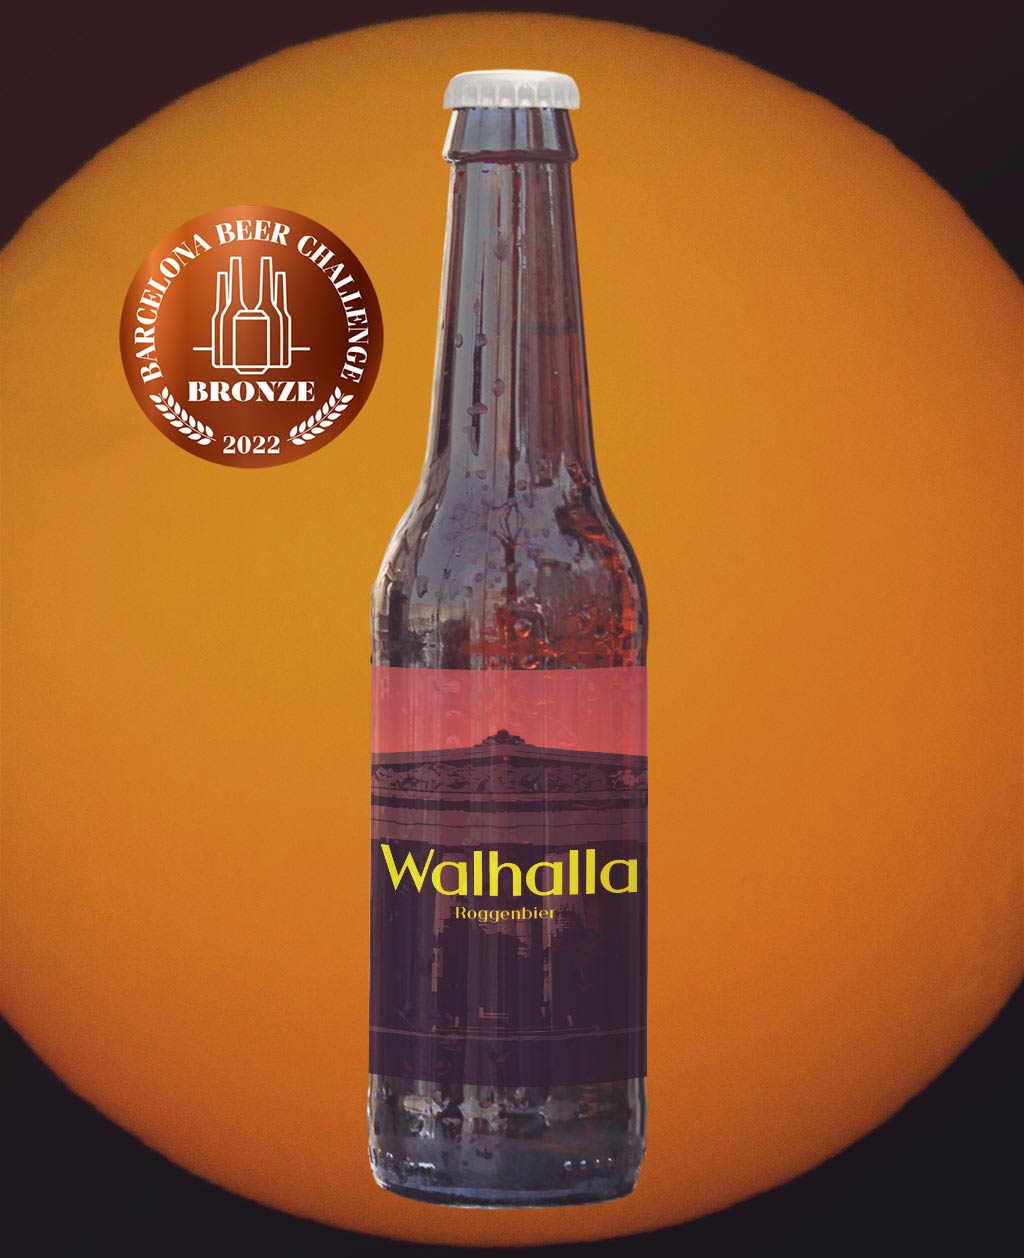 aloumina-cervexa-artesana-craft-beer-caja-variada-serietola-frikisatope-walhalla-bronce-barcelonabeerchallenge-2022-1024×1268-001